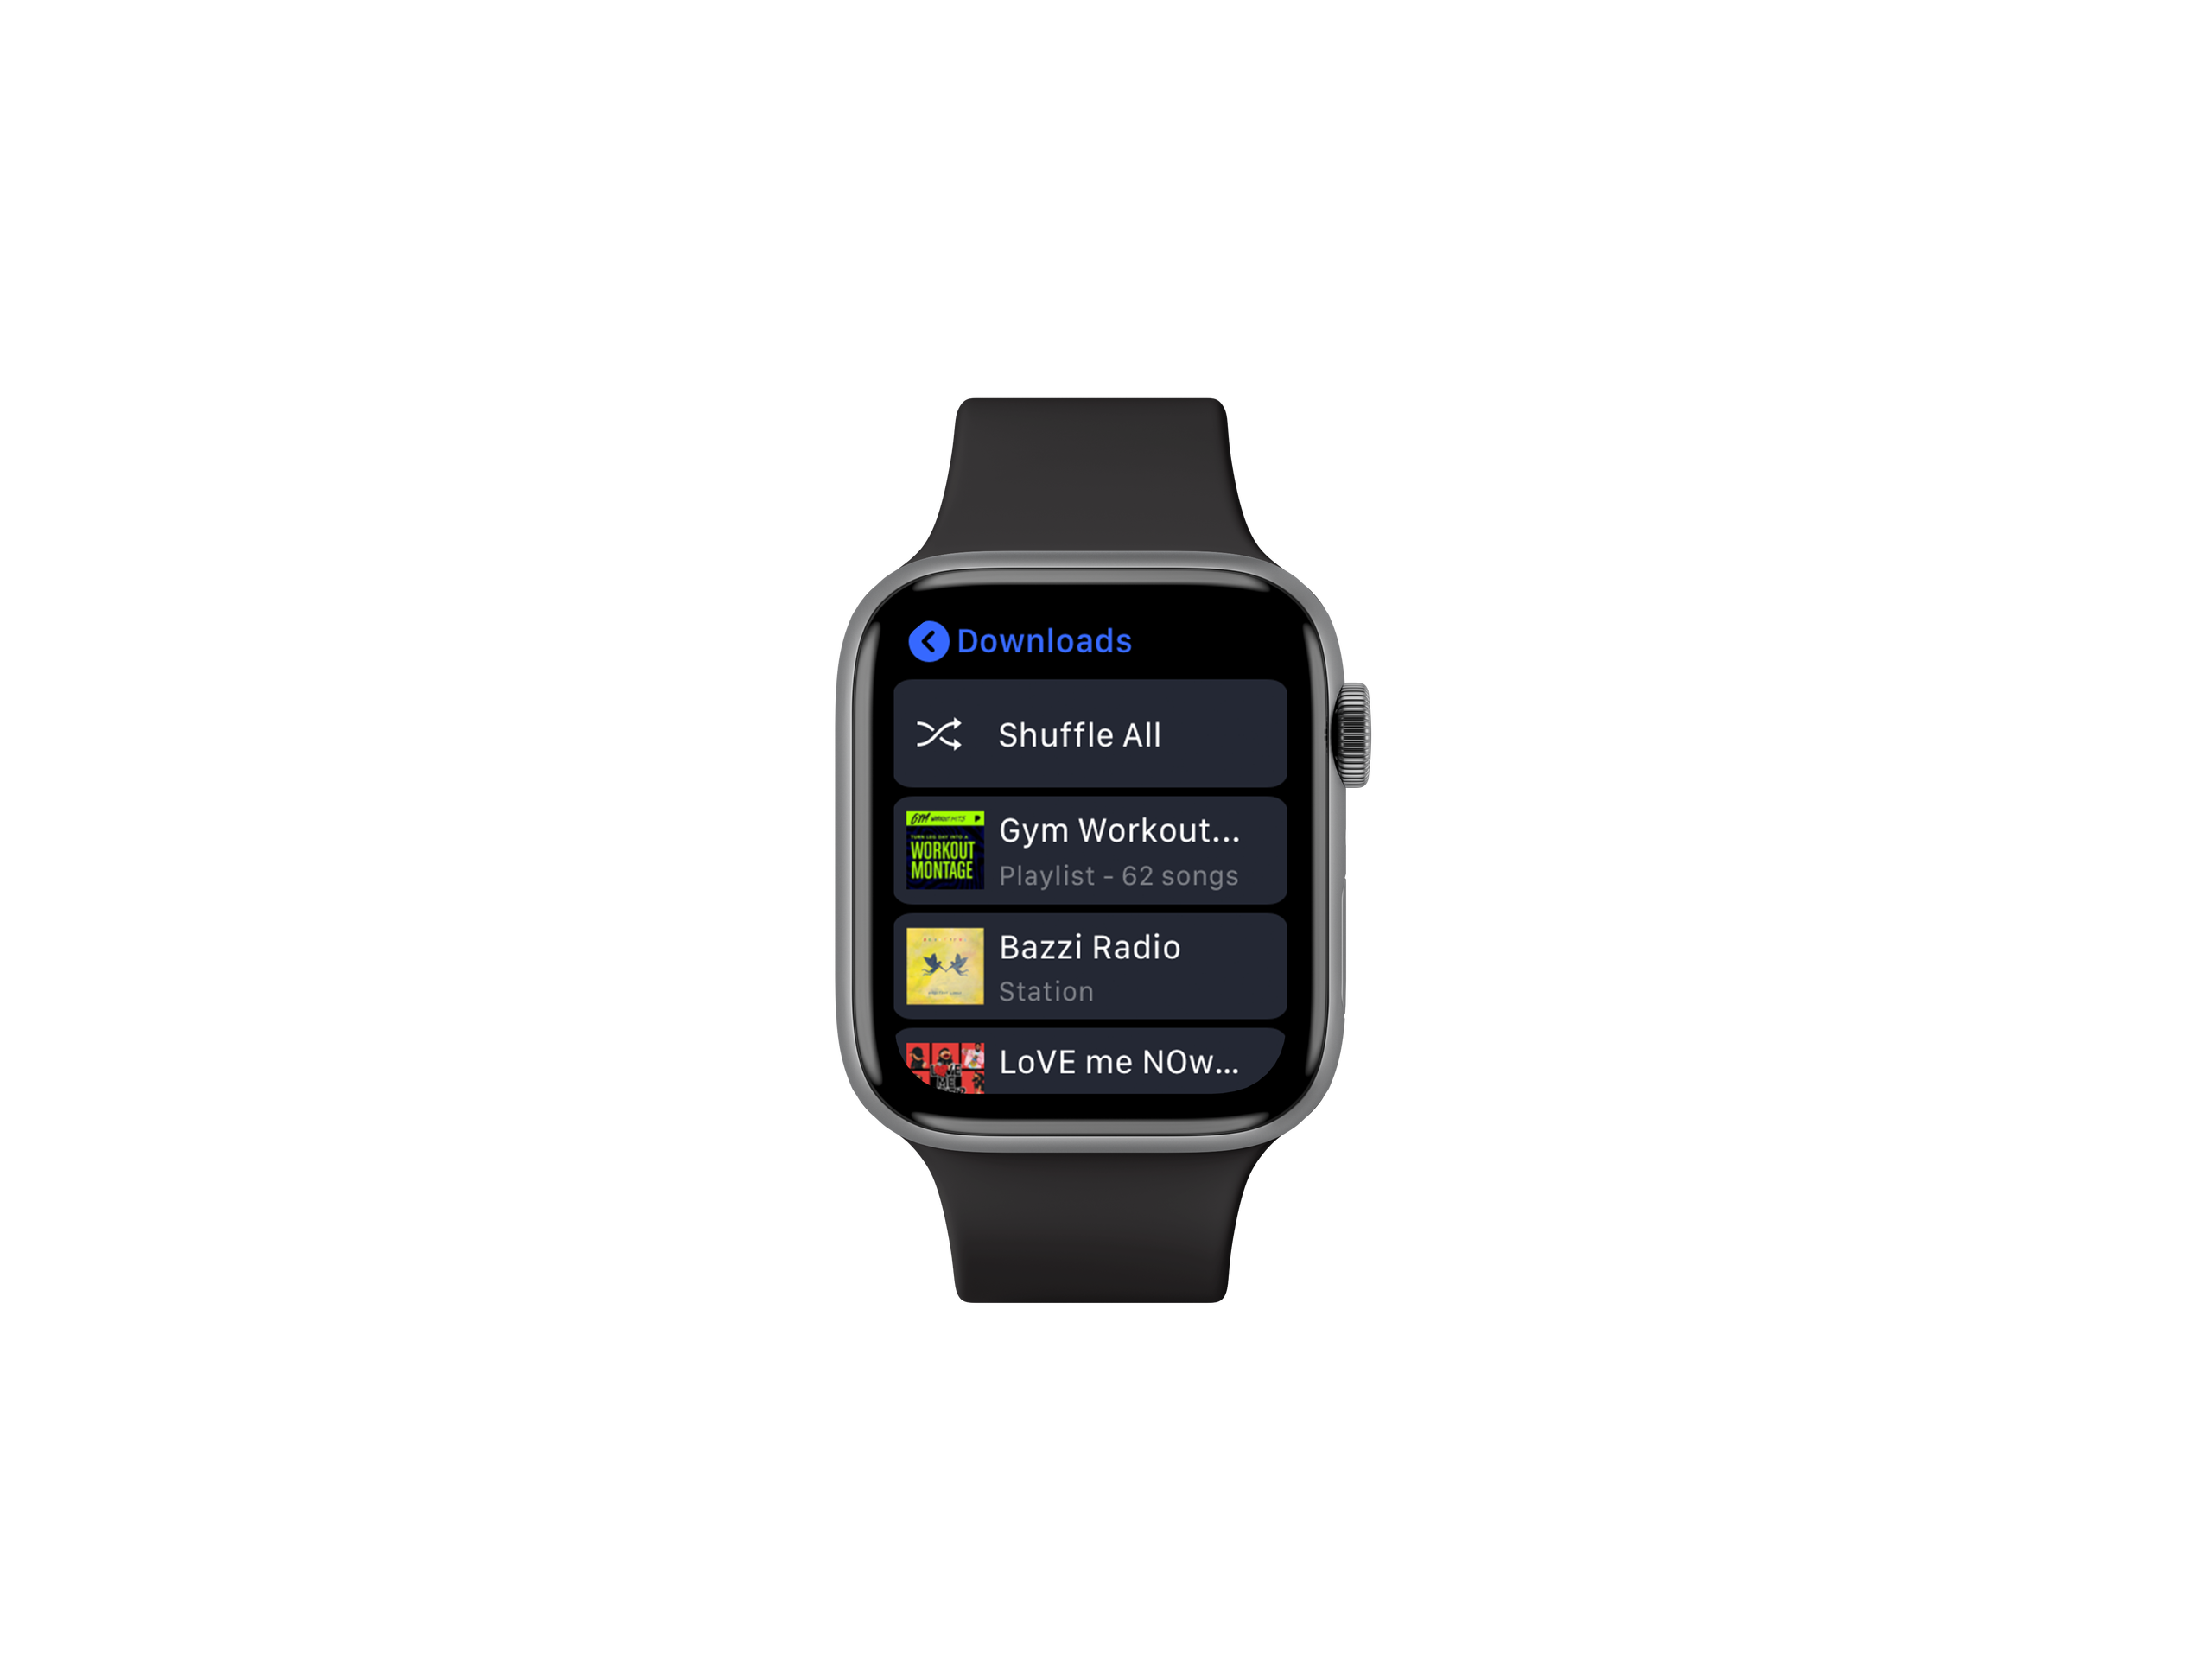 Pandora’s new Apple Watch app is now live